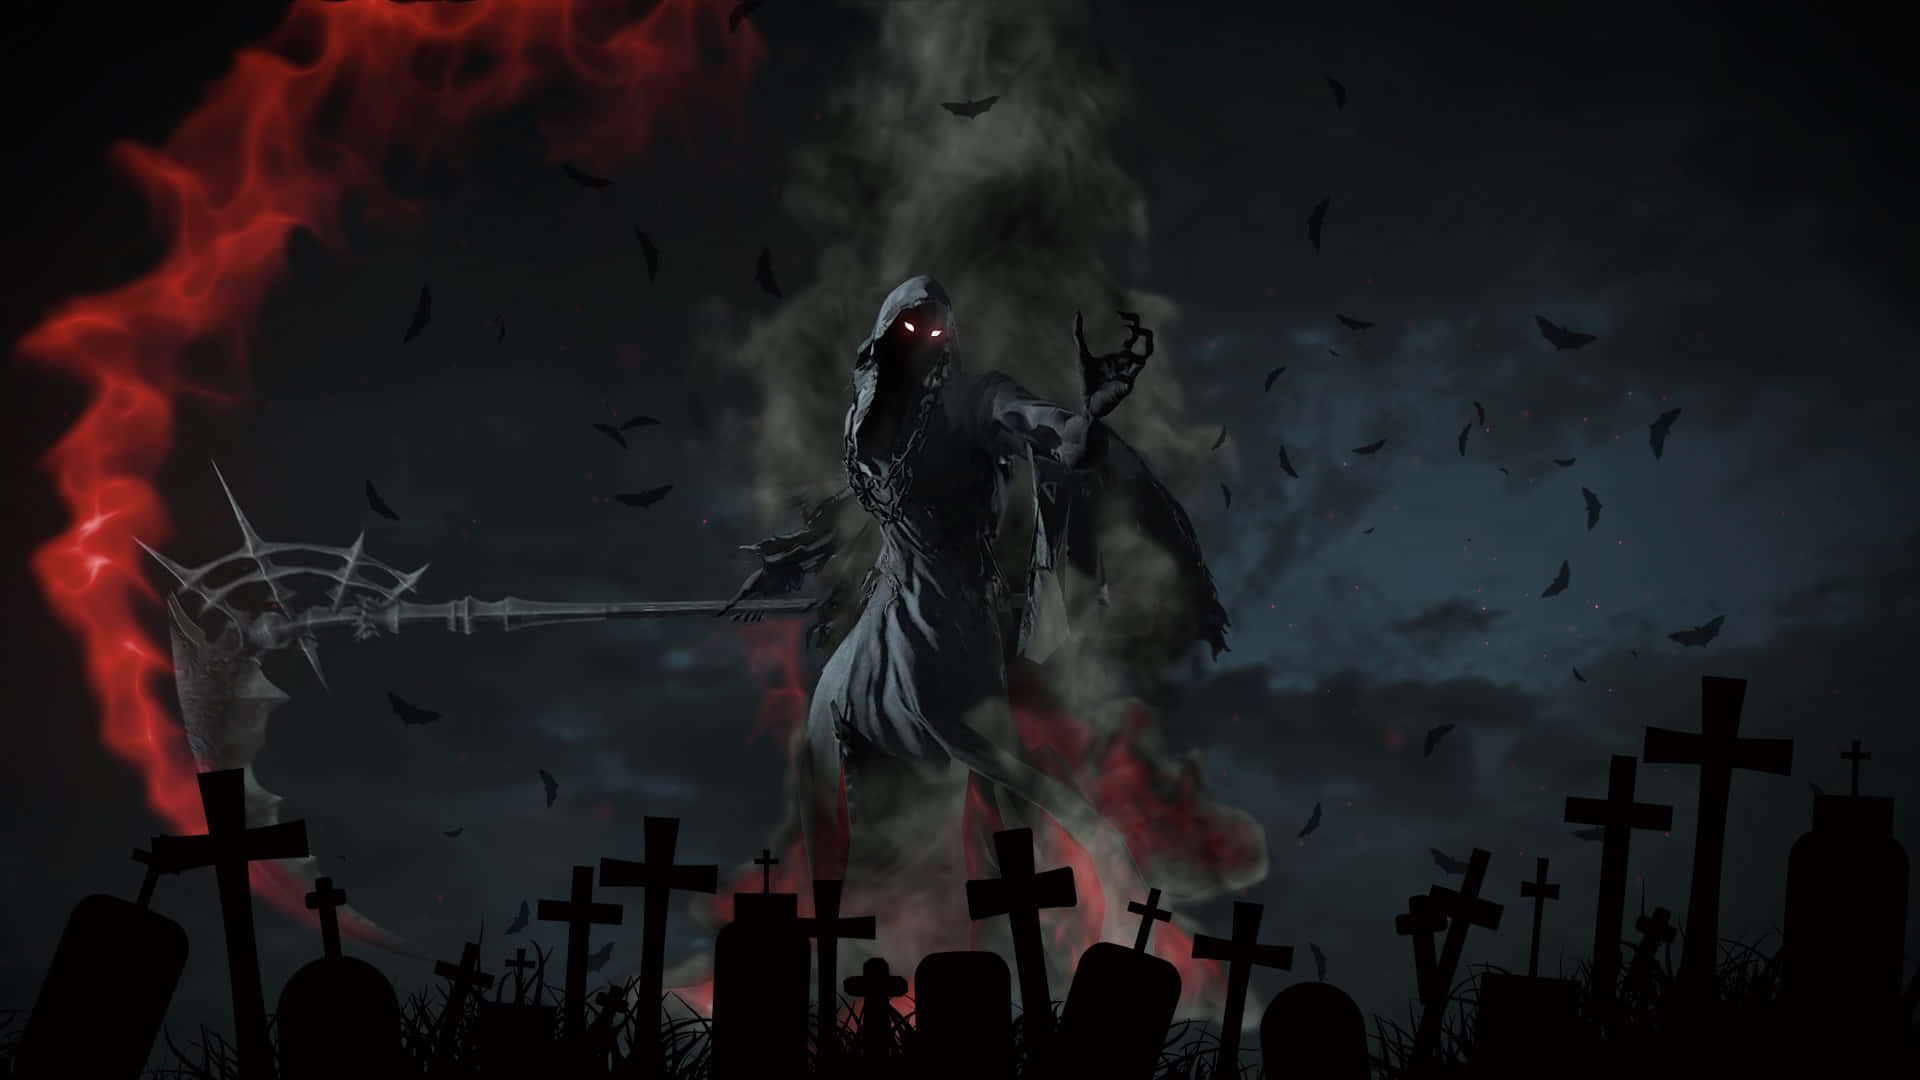 The Grim Reaper - Symbol of Death